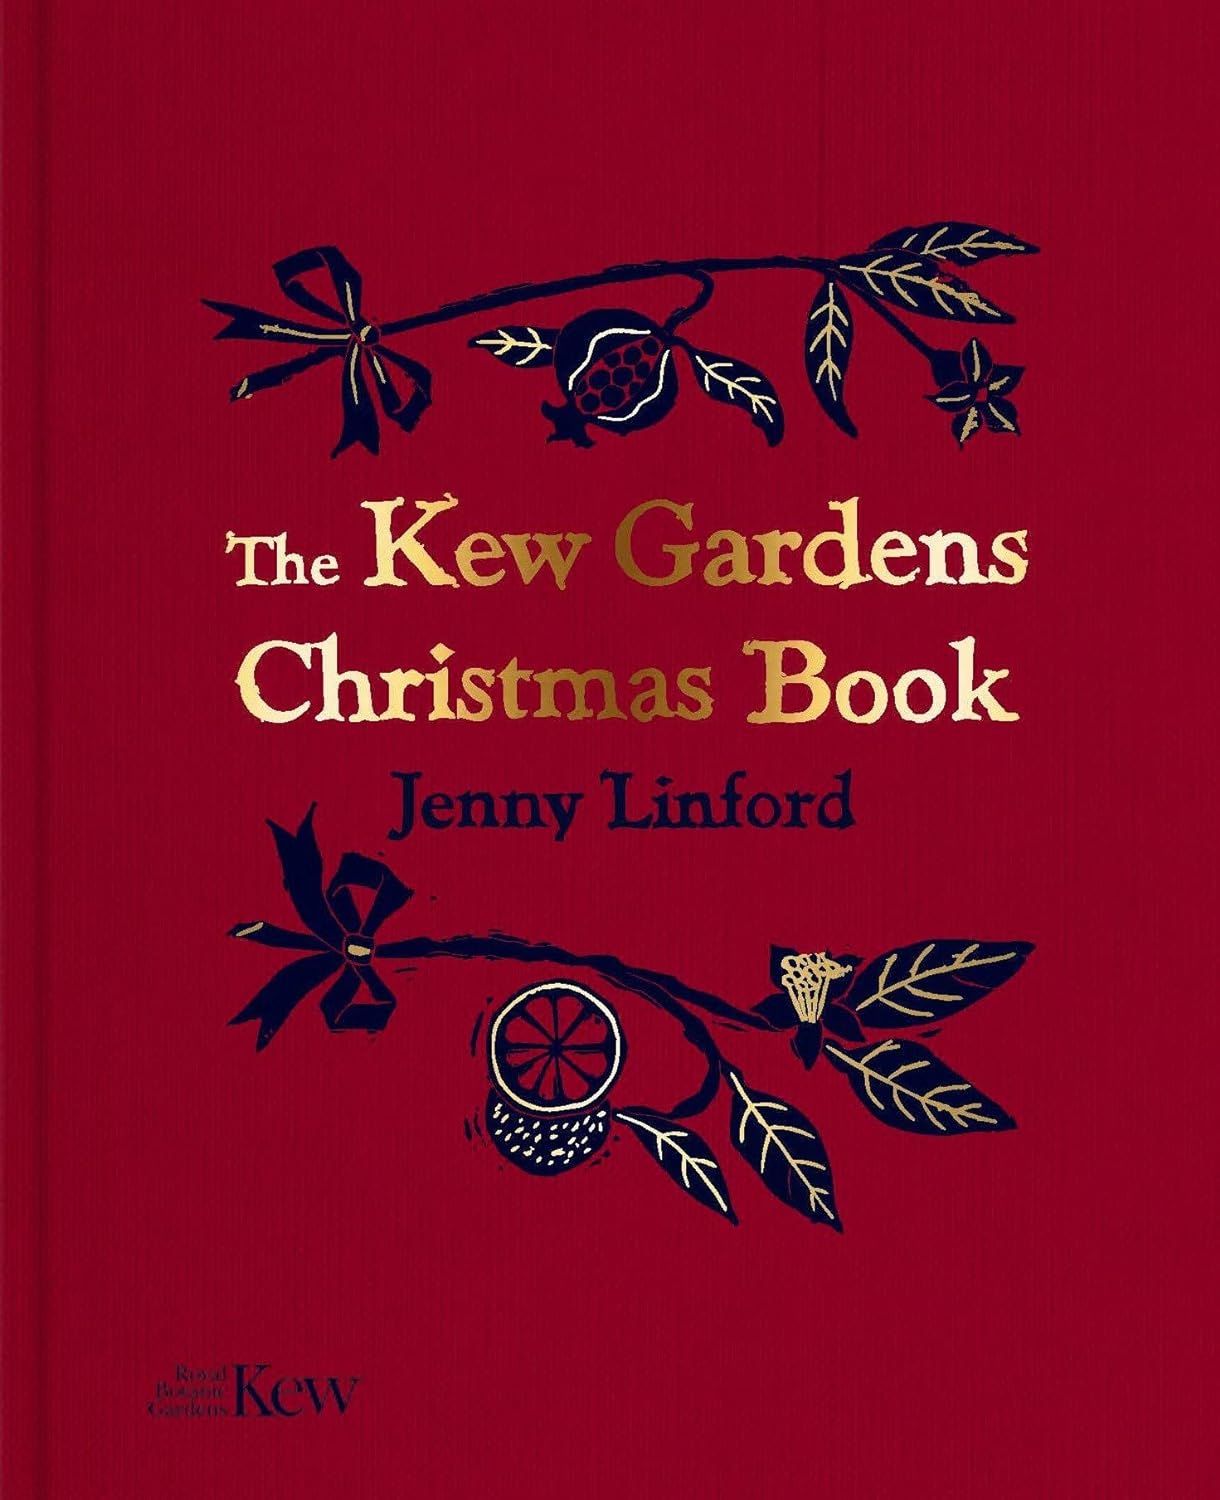 The Kew Gardens Christmas Book (Jenny Linford)